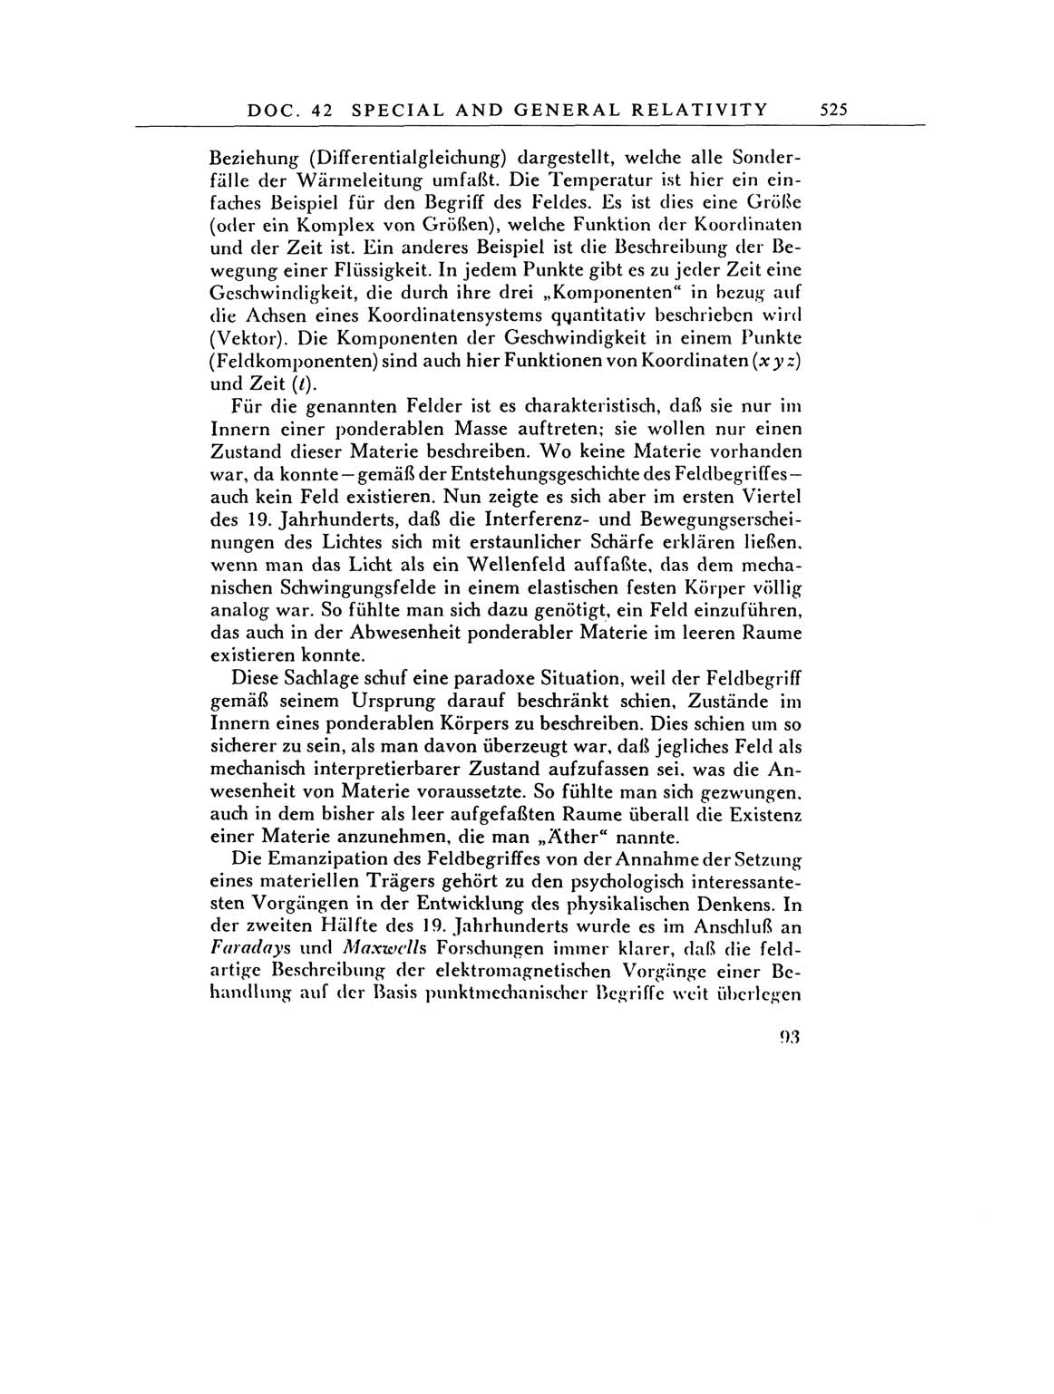 Volume 6: The Berlin Years: Writings, 1914-1917 page 525